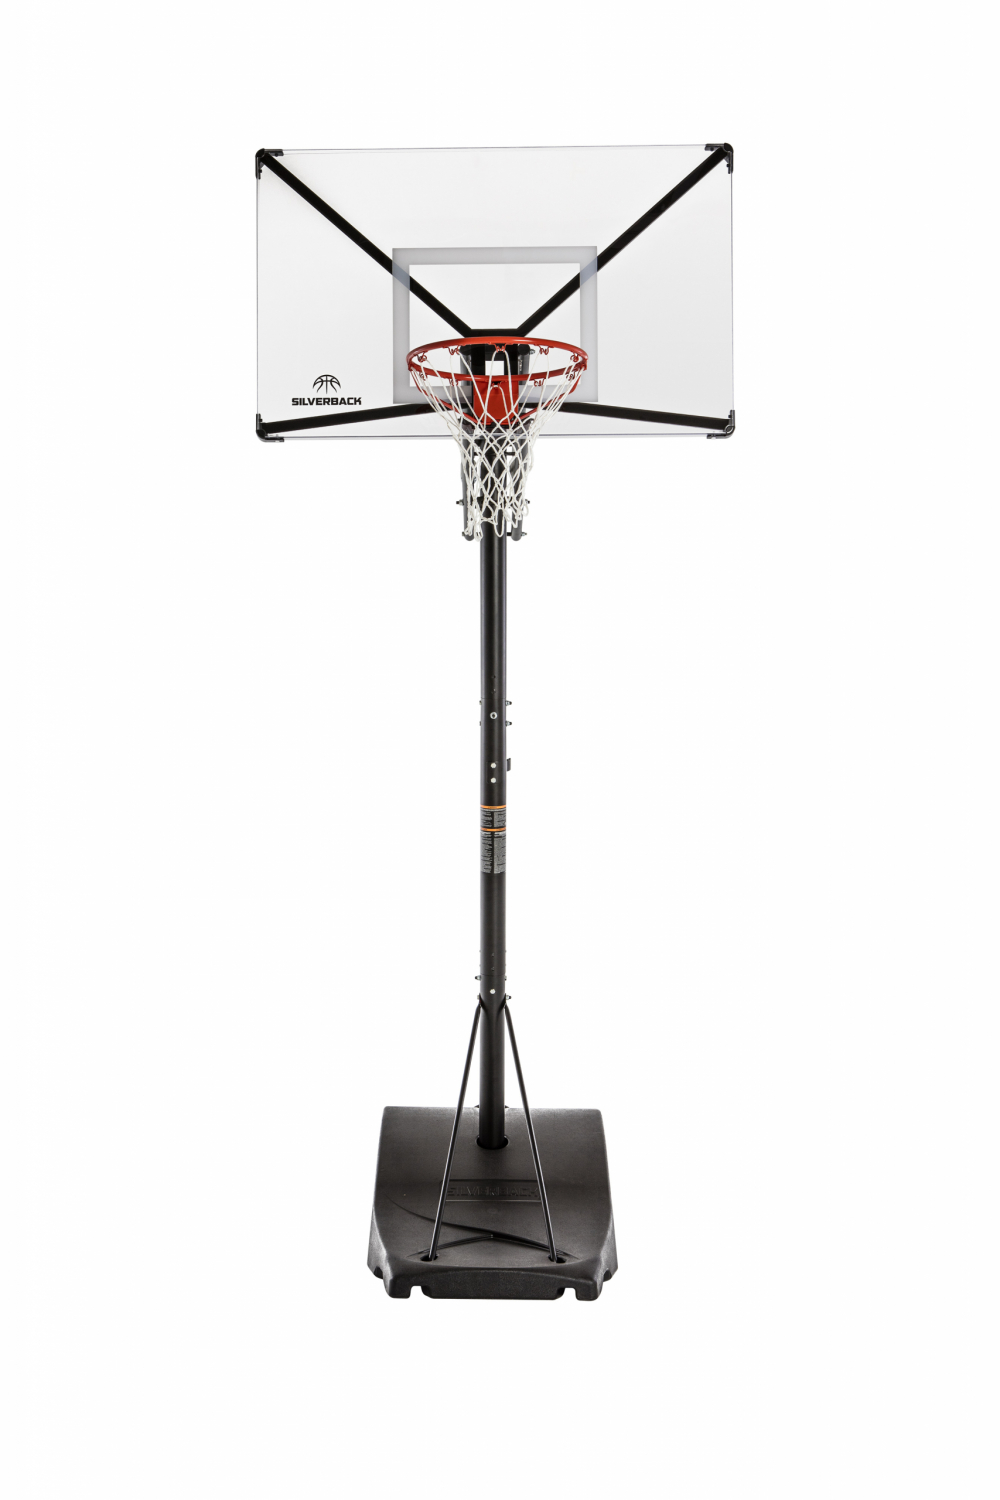 silverback nxt 54 in portable basketball hoop